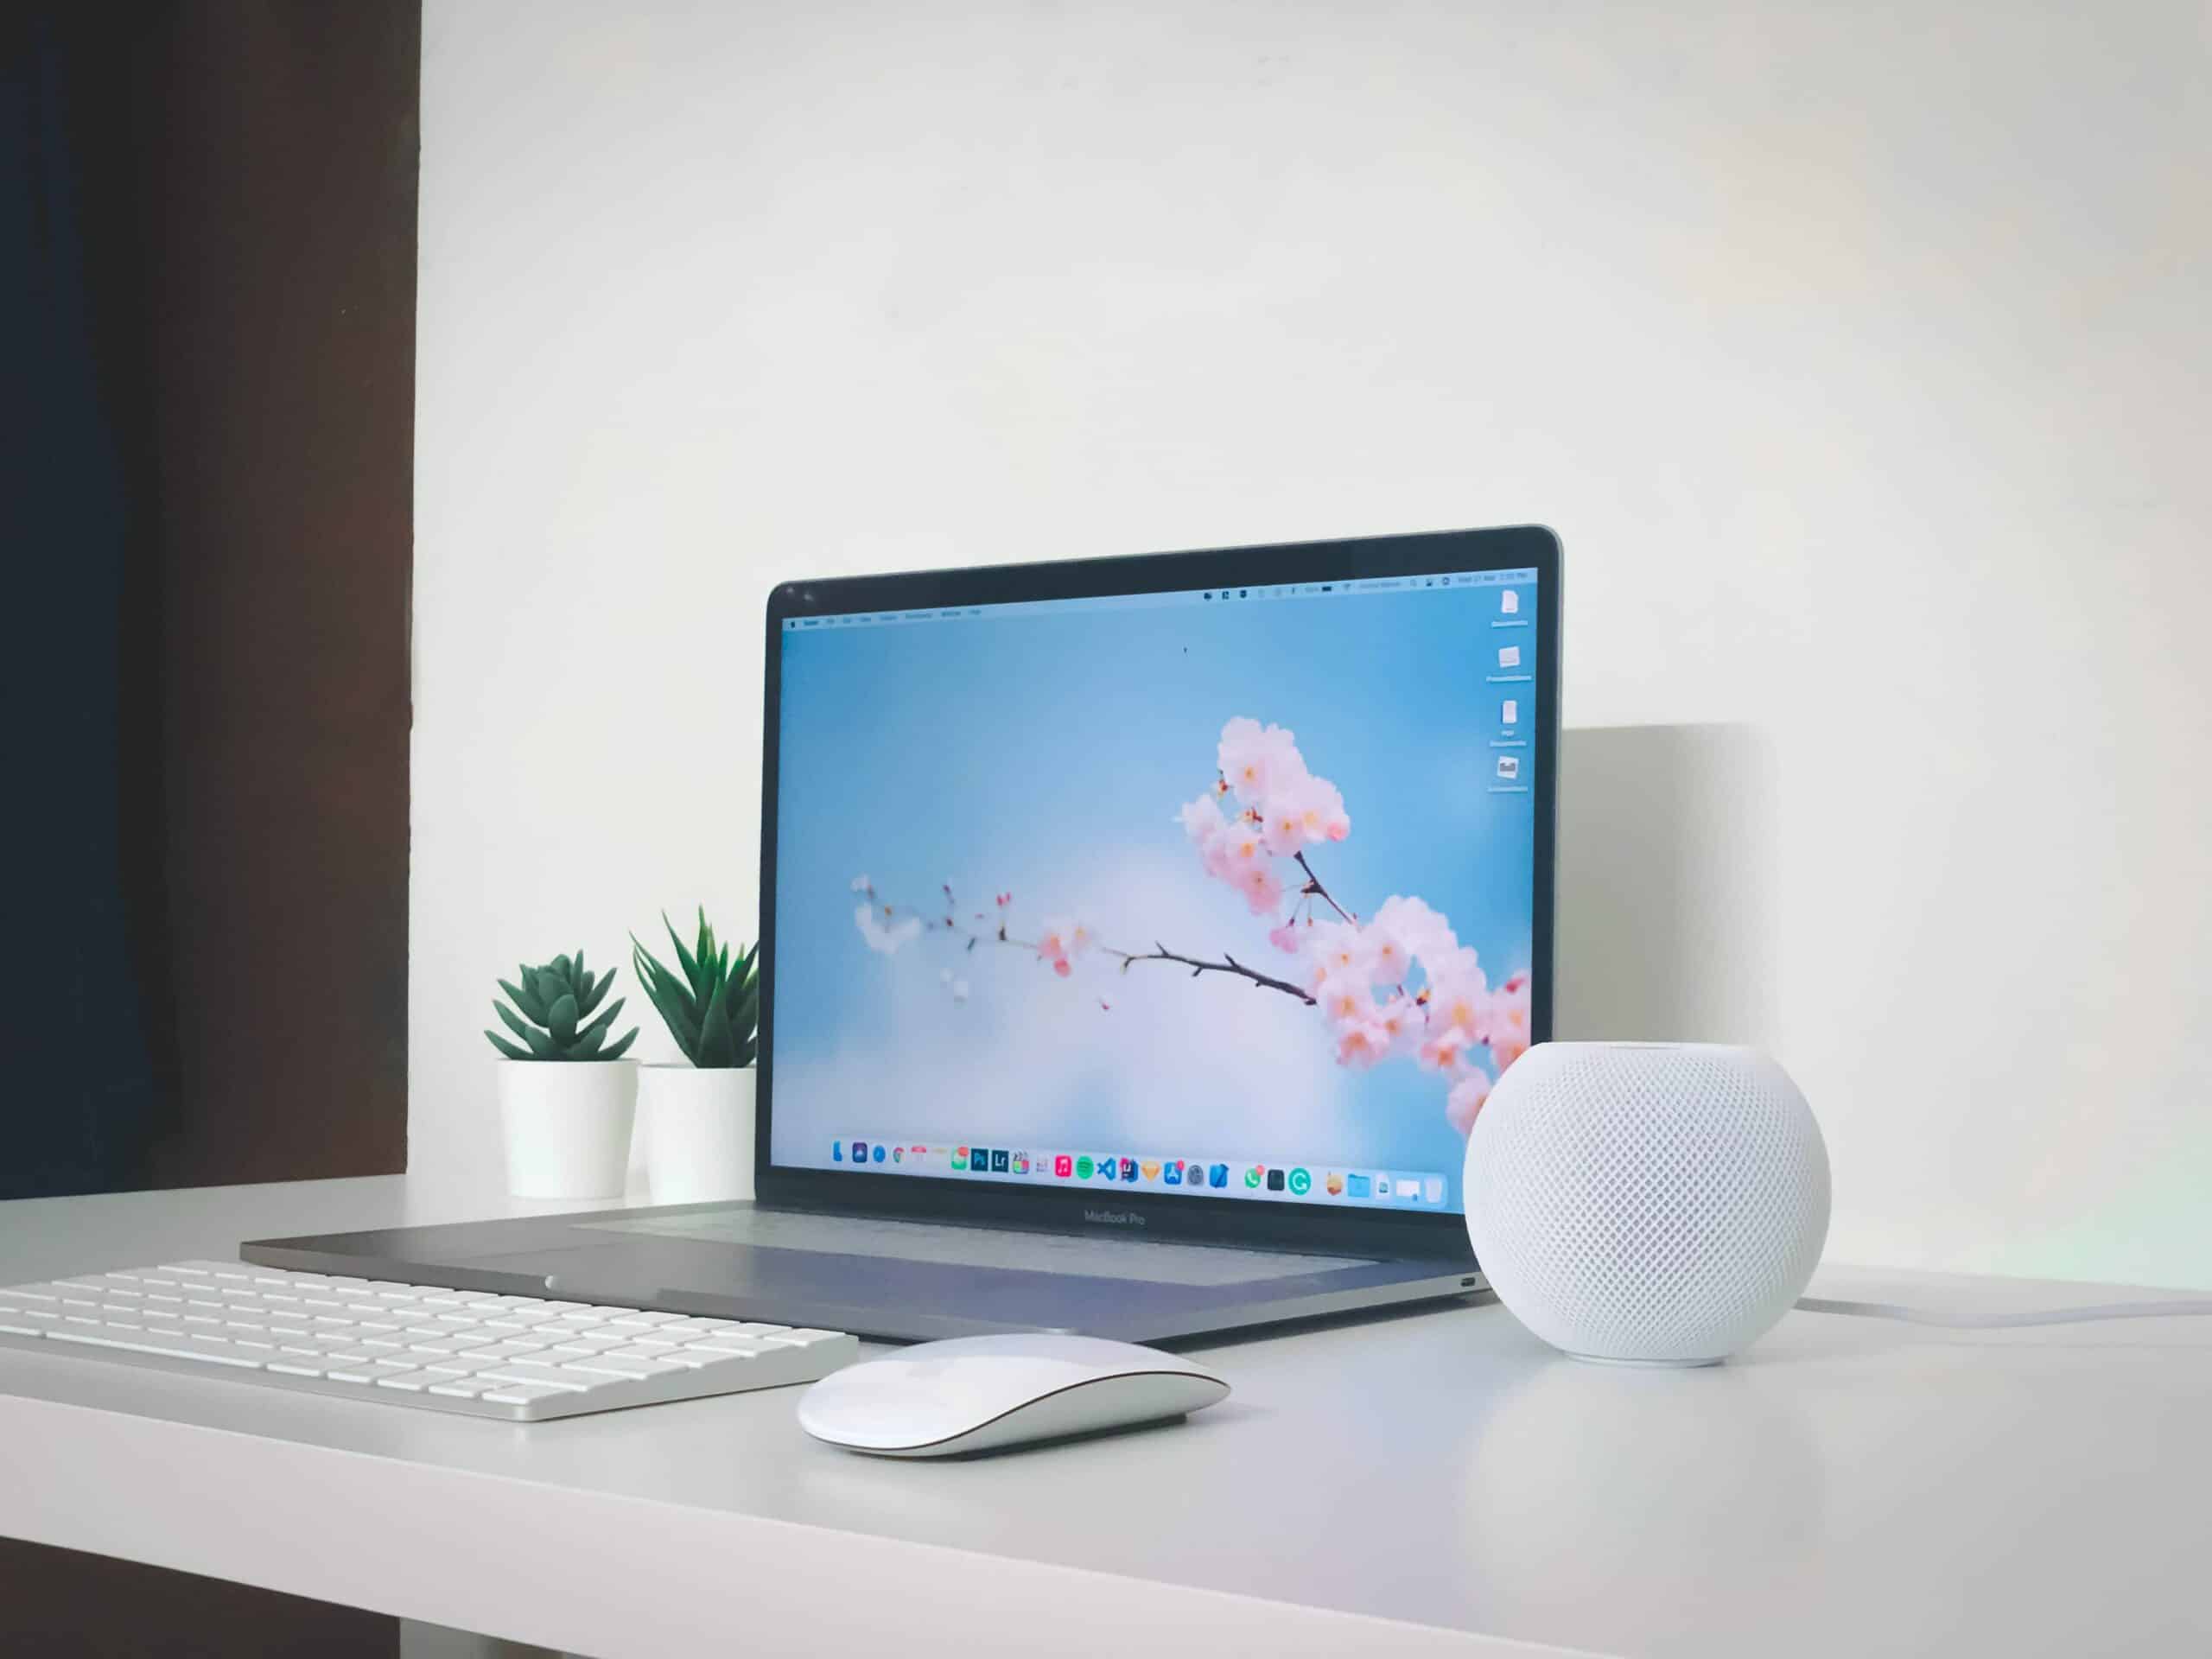 Home Pod mini with a MacBook Pro on a desk